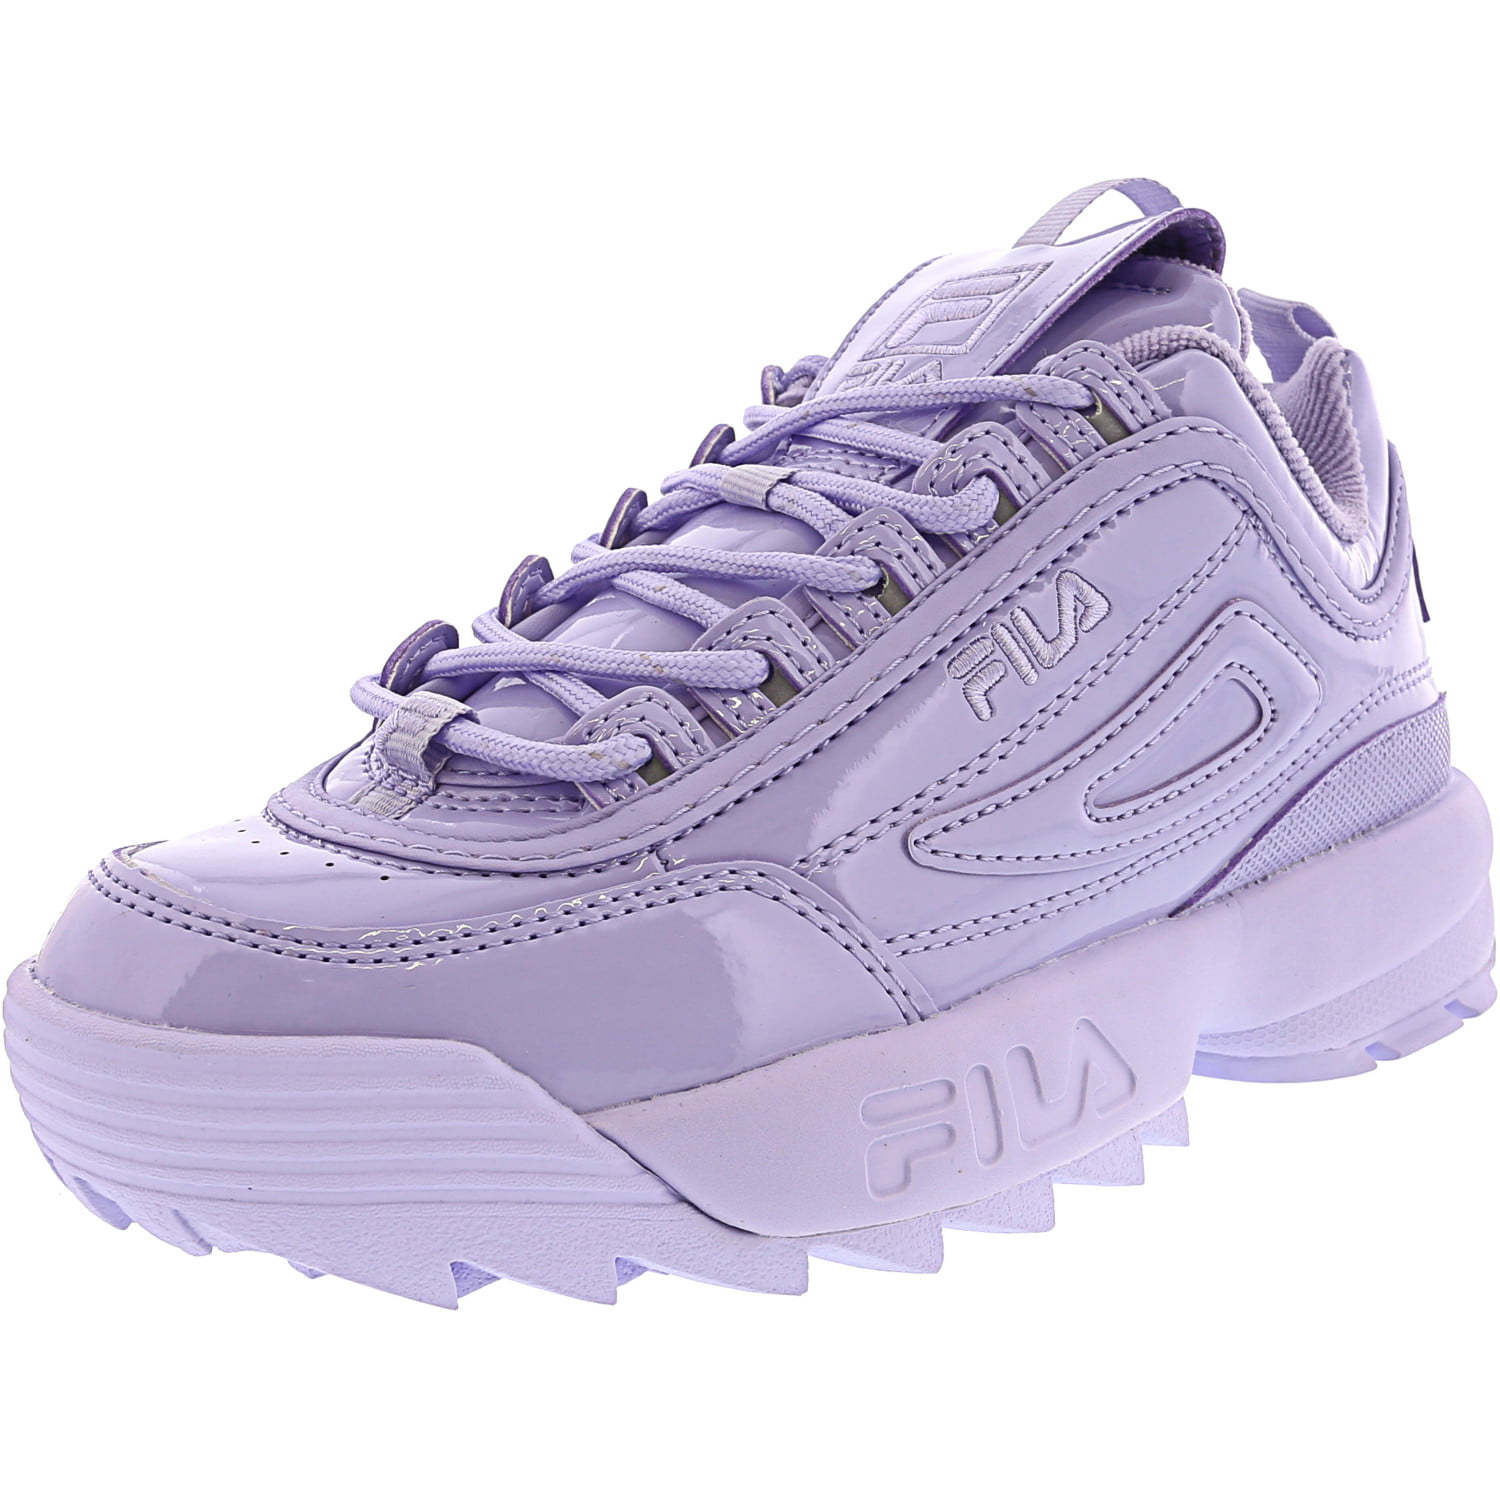 Fila Women's Disruptor Ii Premium Patent Lilac Ankle-High Sneaker - 6 ...